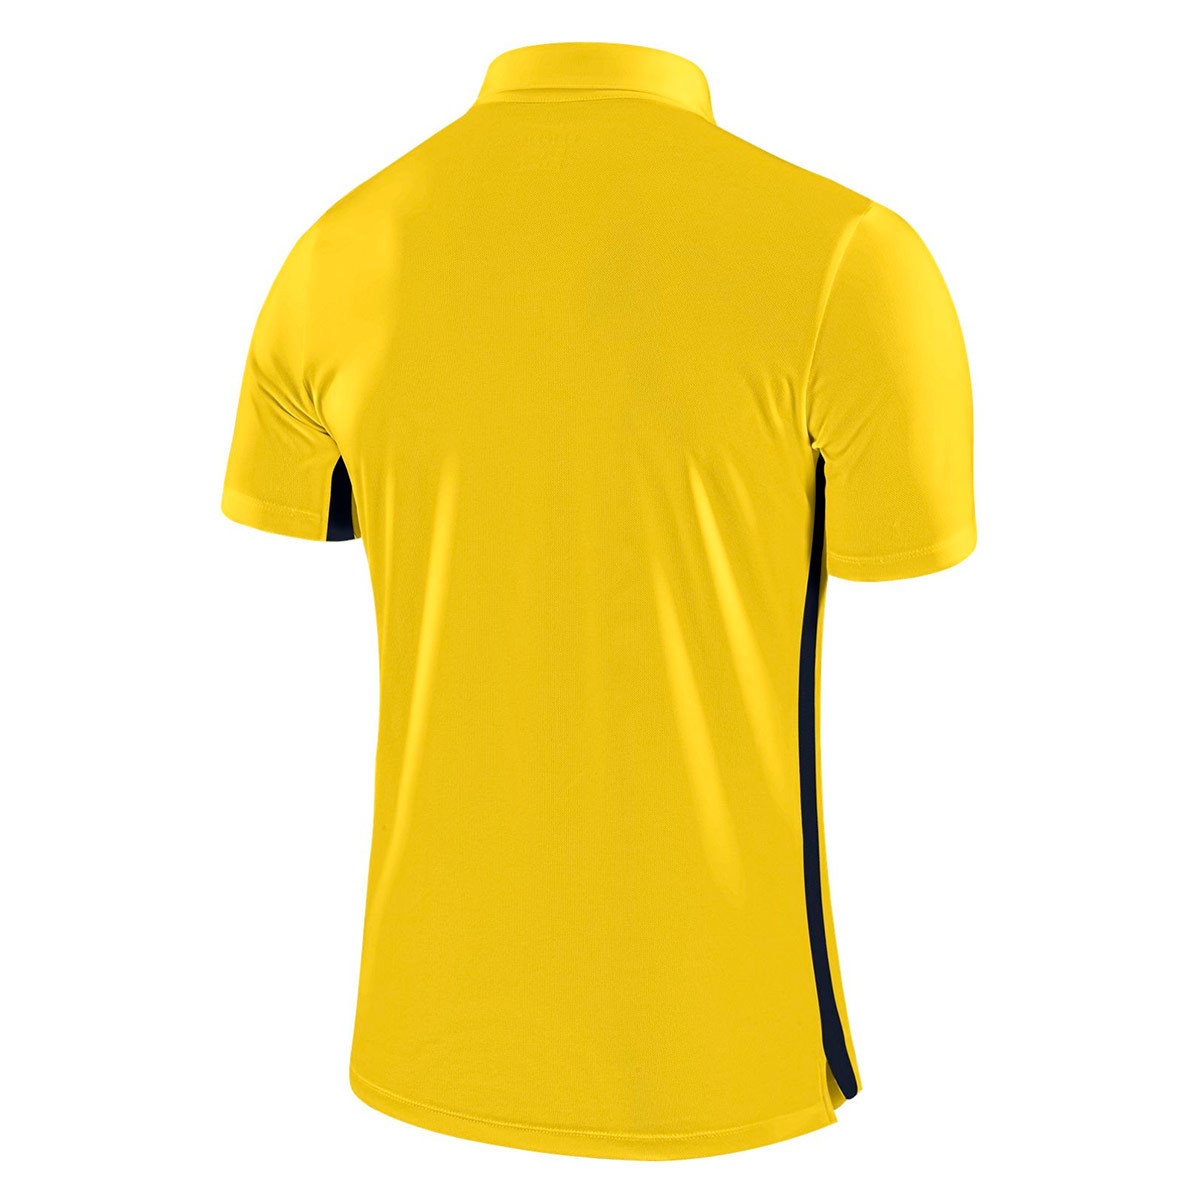 black & yellow nike shirt